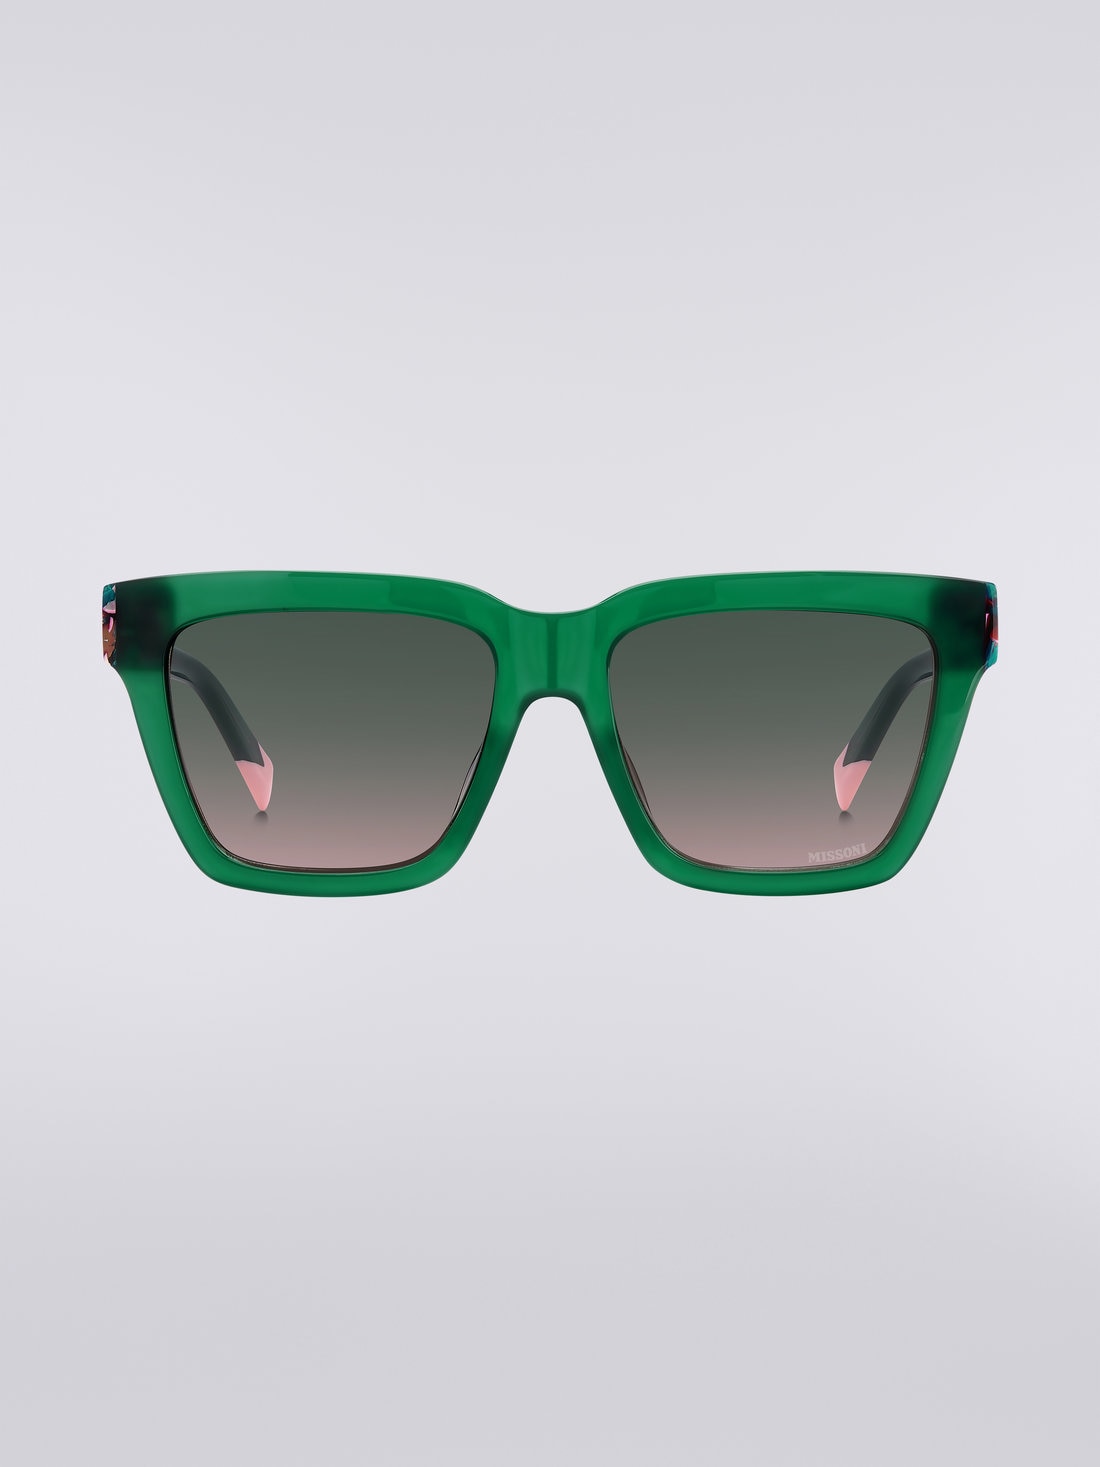 Missoni Seasonal Acetate Sunglasses, Green & Pink - 8051575840203 - 0